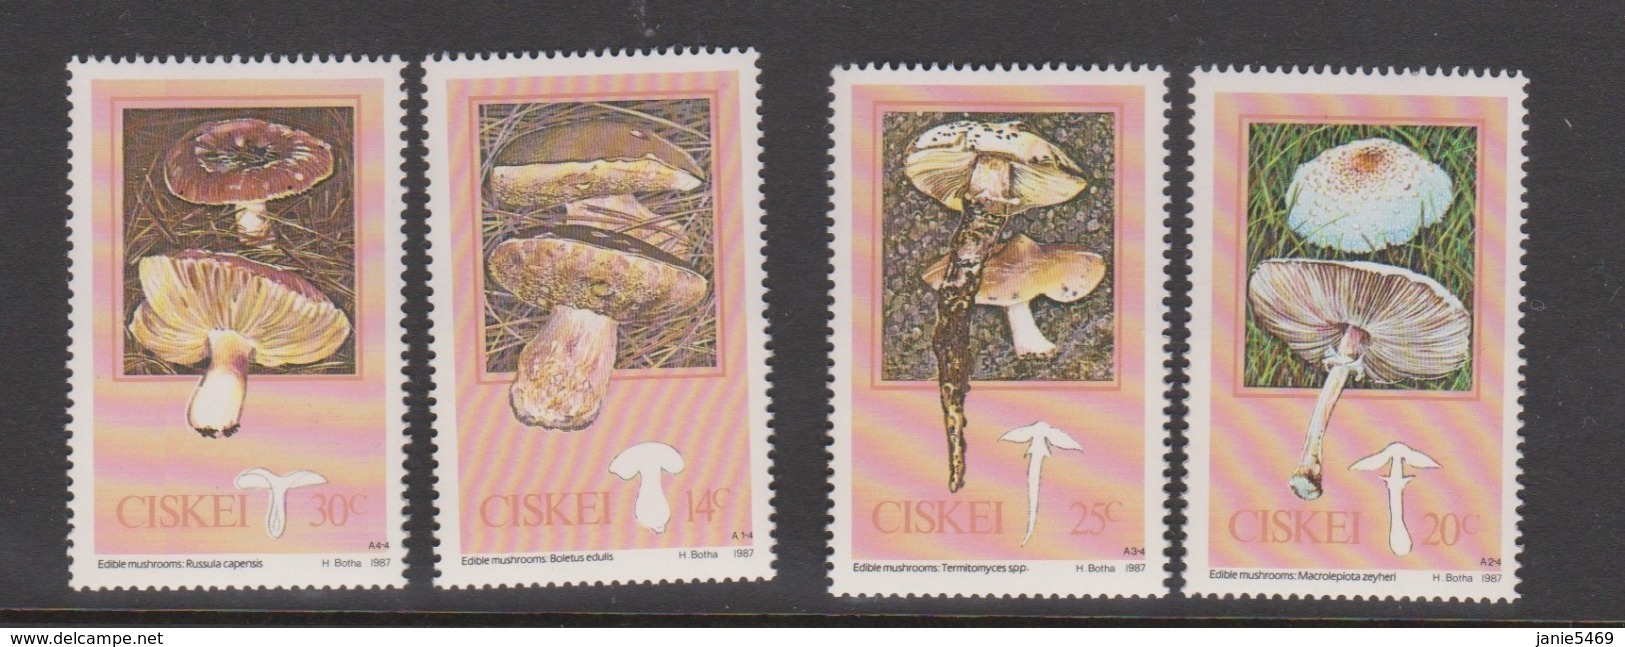 South Africa-Ciskei Scott 102-105 1987 Edible Mushrooms,Mint Never Hinged - Ciskei